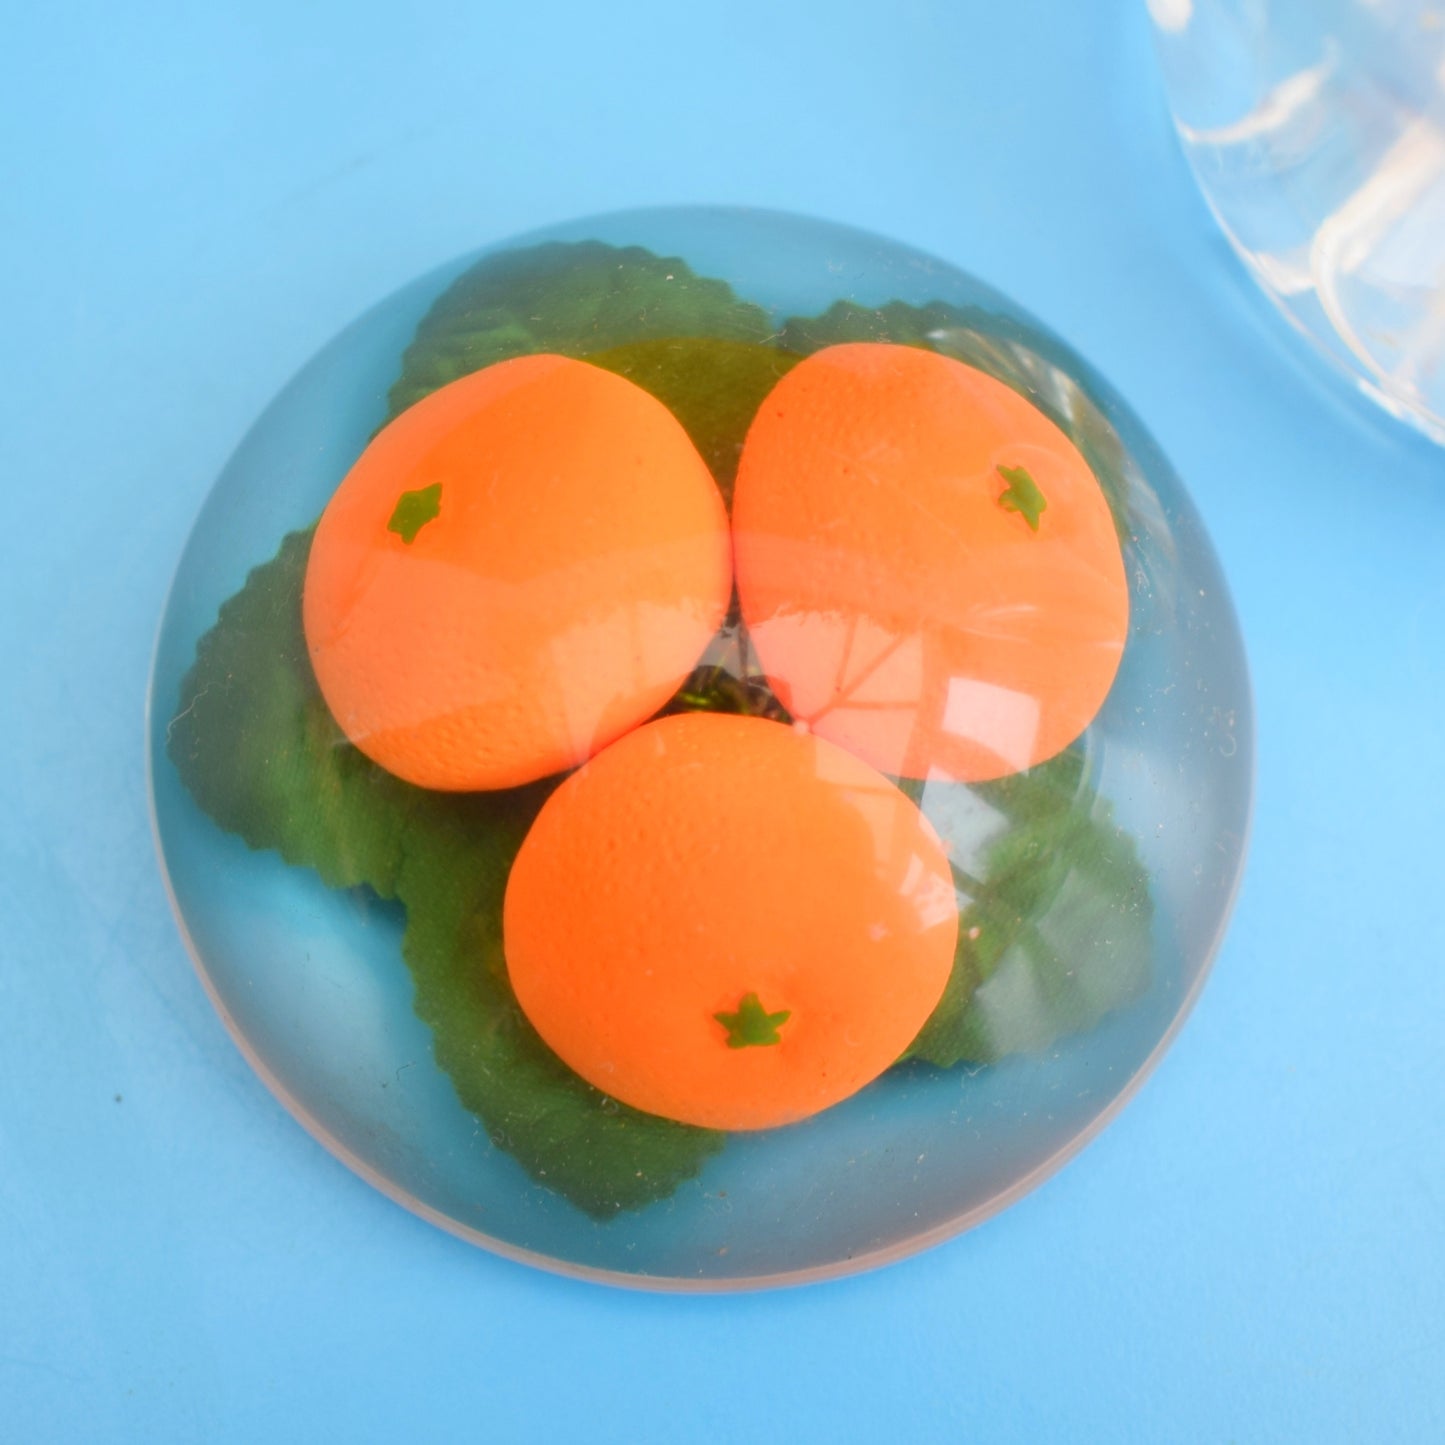 Vintage 1990s Plastic Jam Pot - Orange